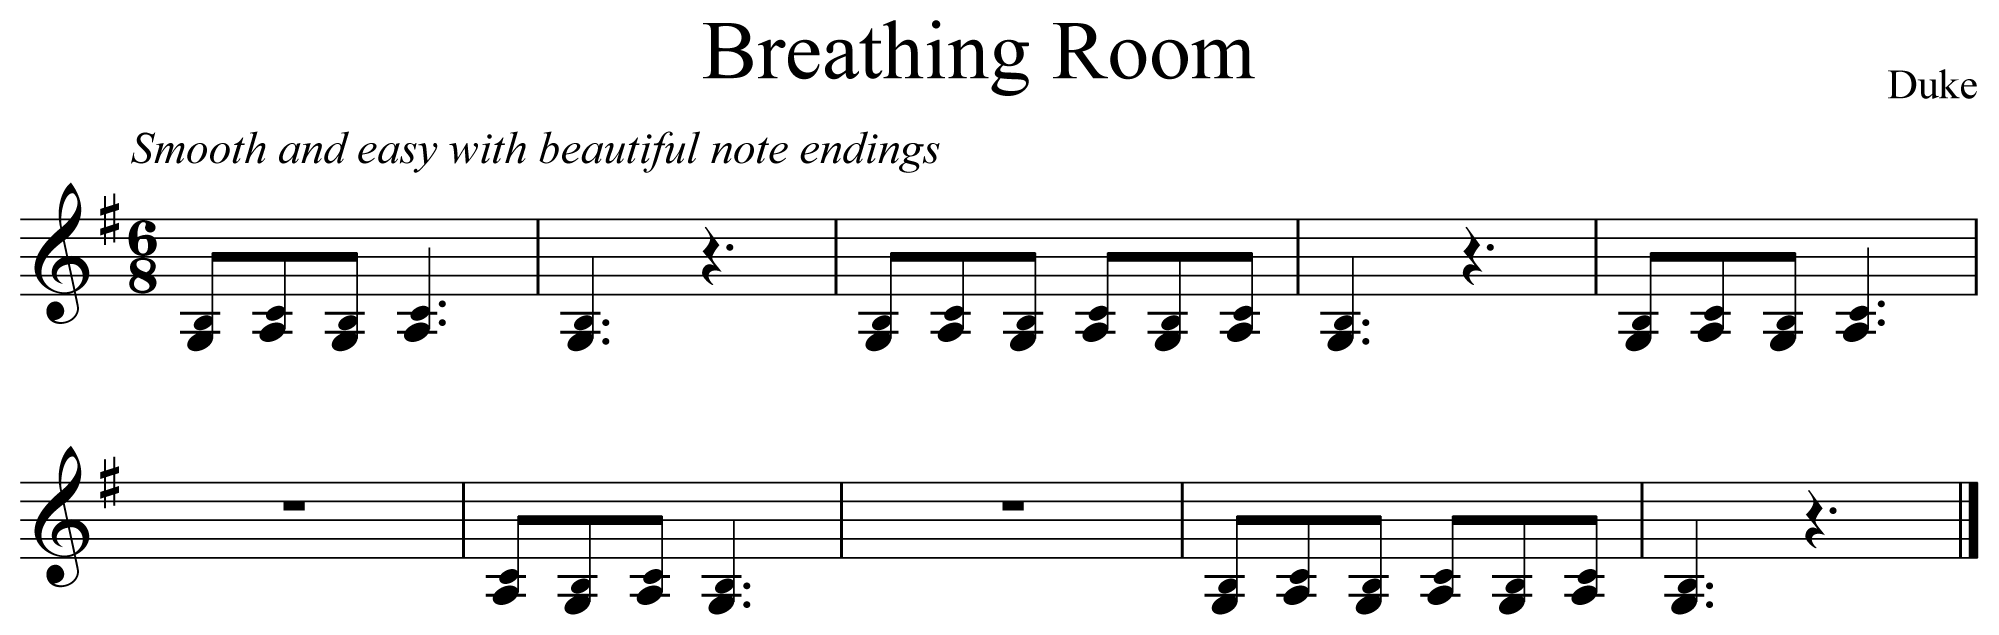 Breathing Room Music Notation Clarinet